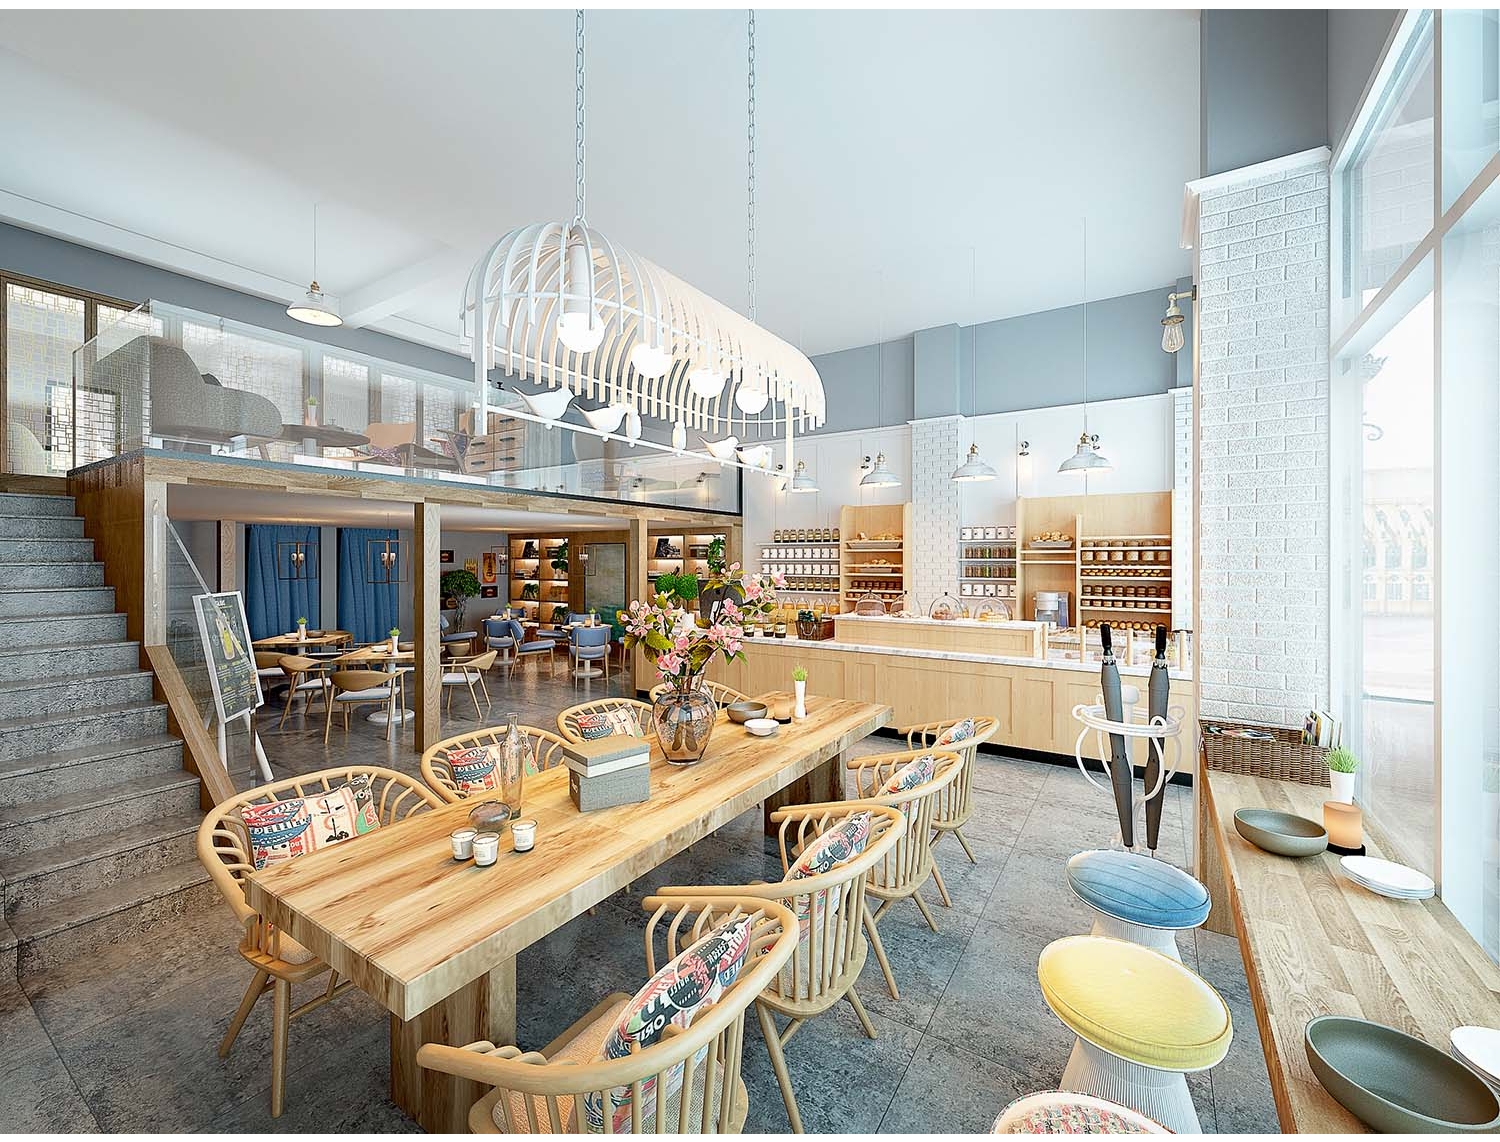 Restaurant/coffee bar/hotel/Tea house interior rendering